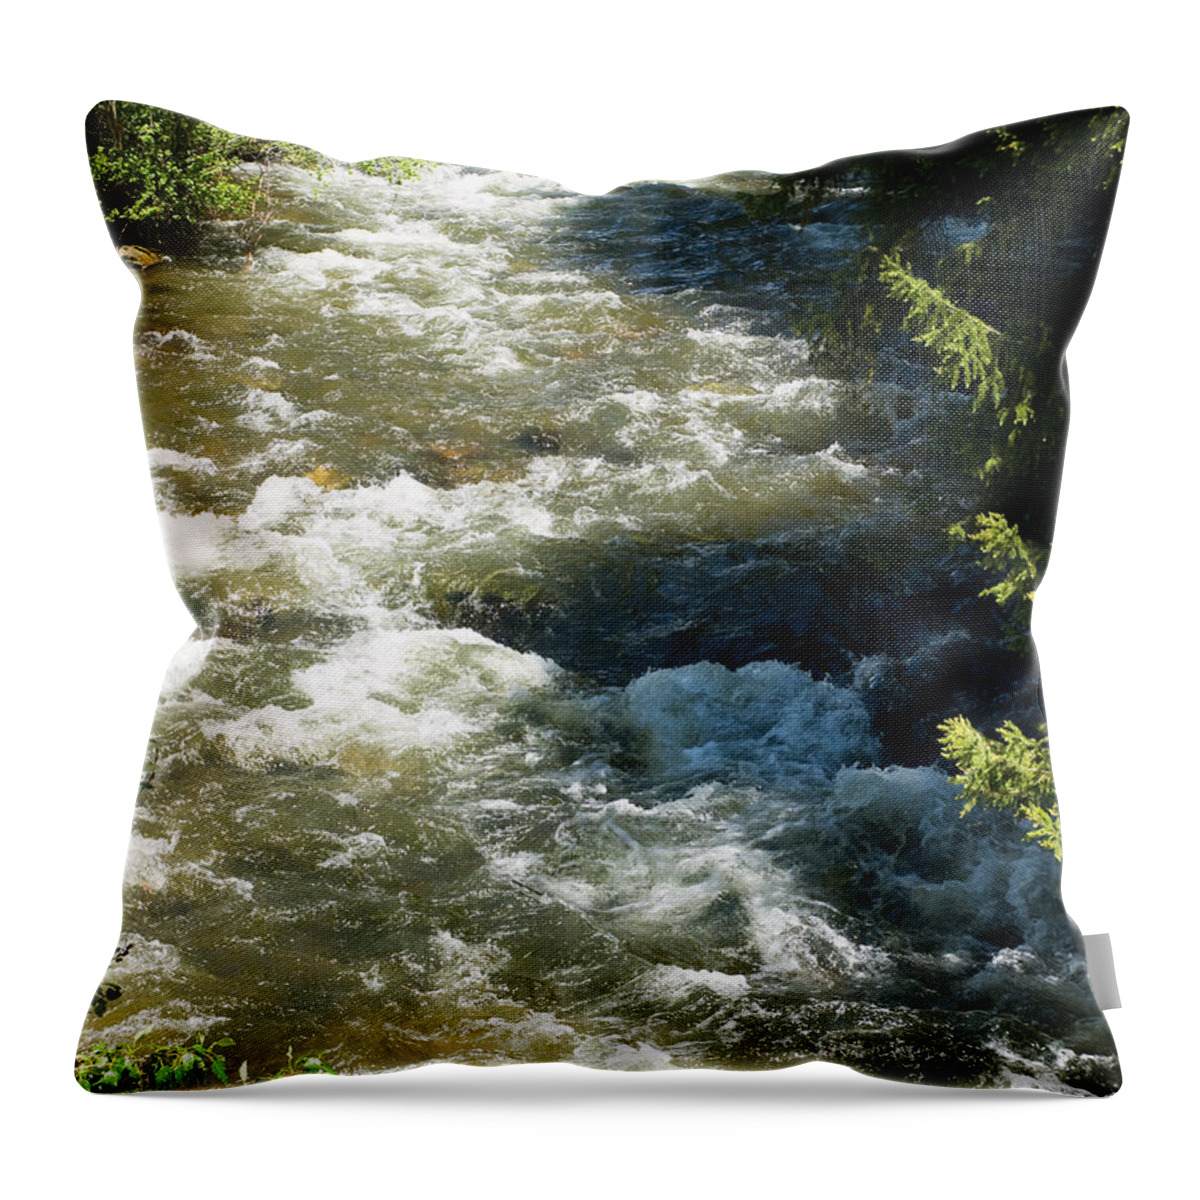 Water Throw Pillow featuring the photograph Run Away by Tara Lynn